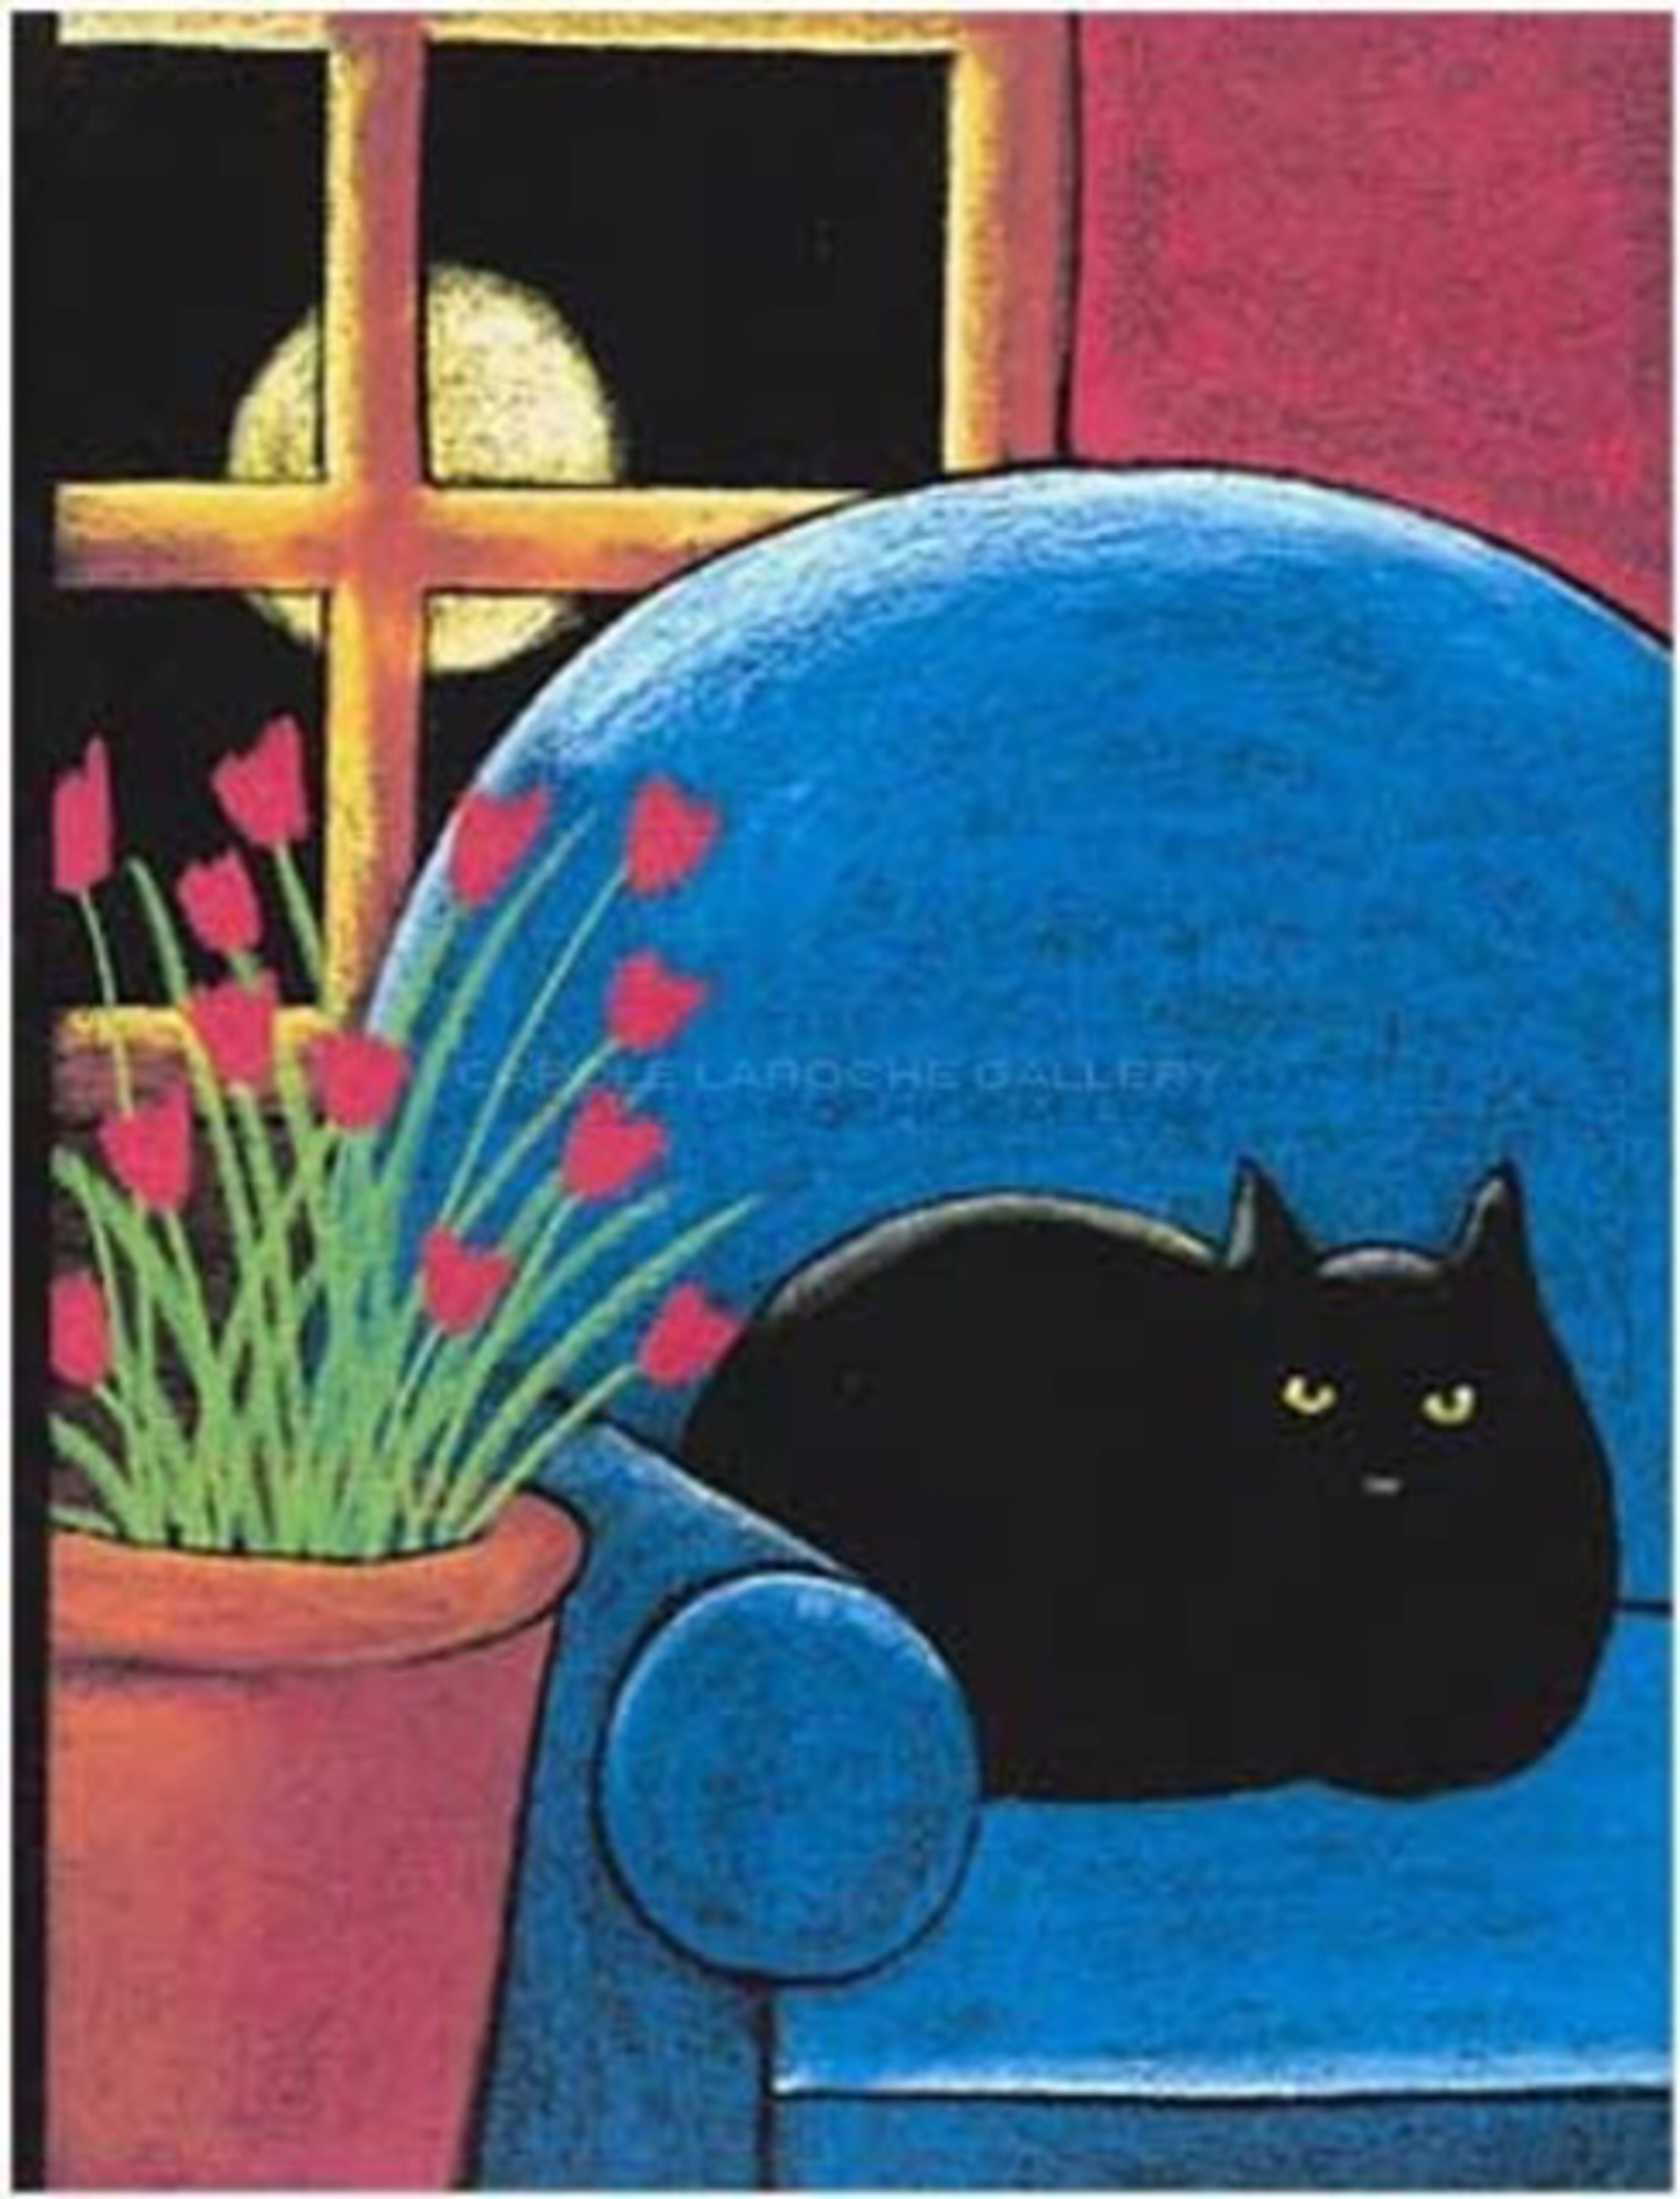 Black cat on blue chair 59/250 by Carole LaRoche